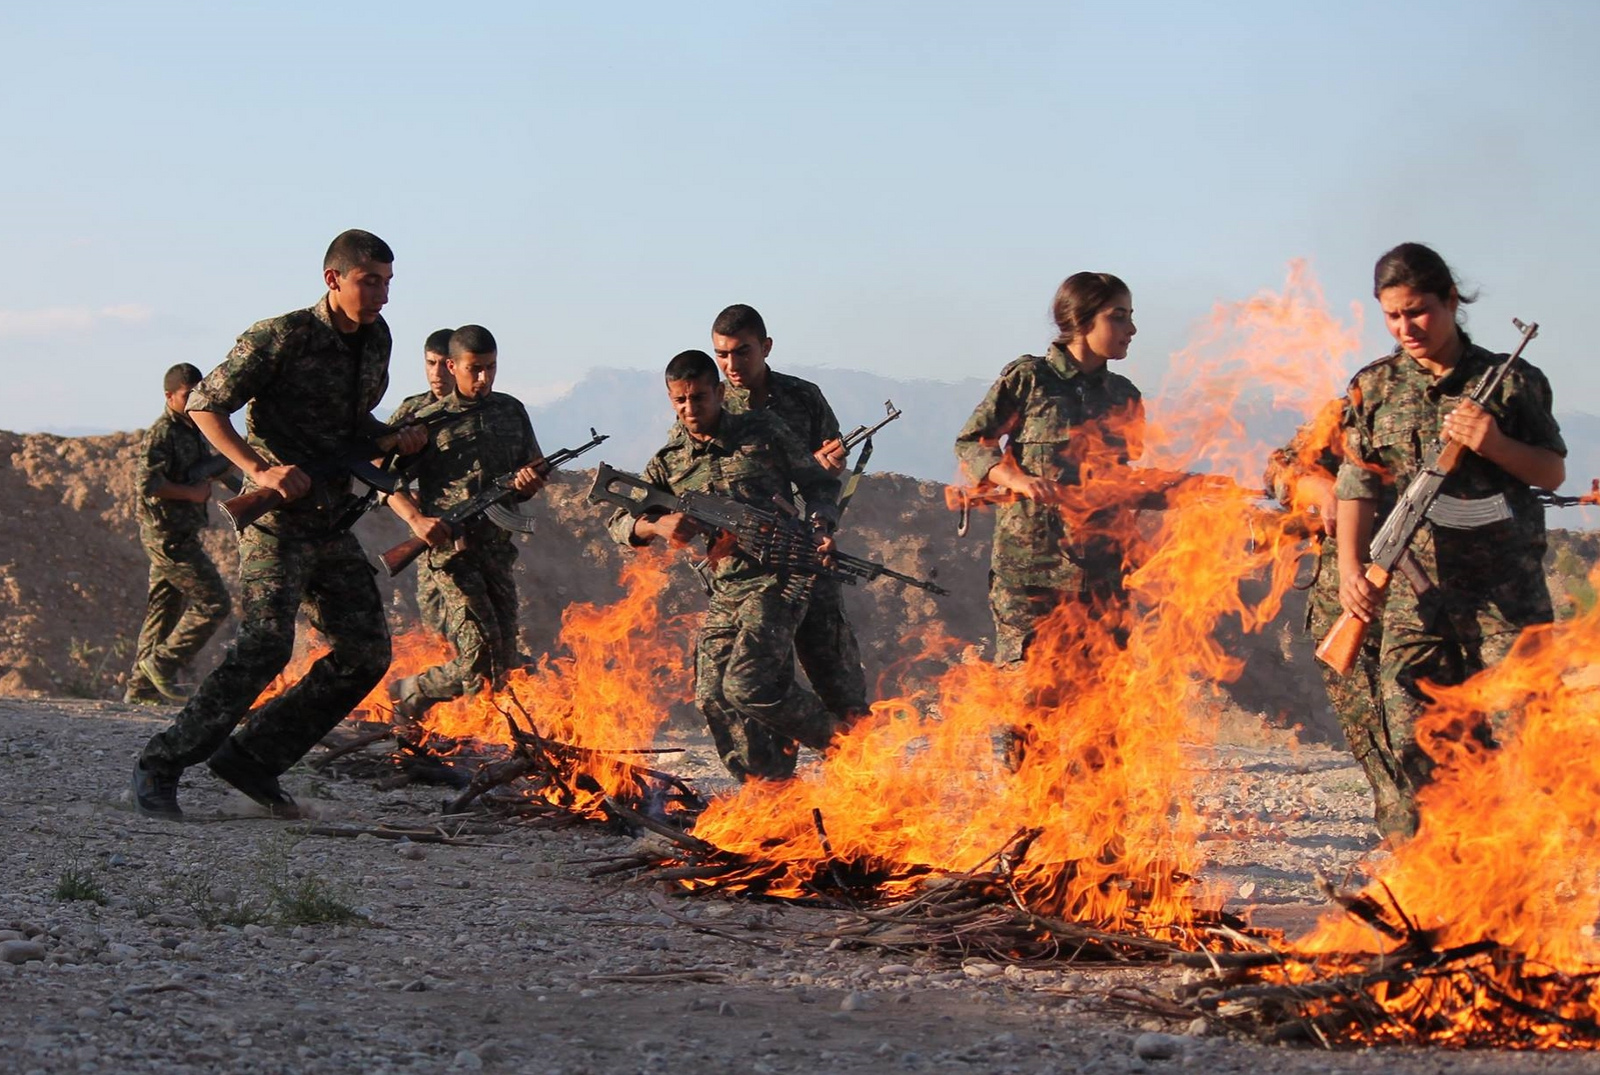 Jihadi soldiers in a desert by burning piles of wood